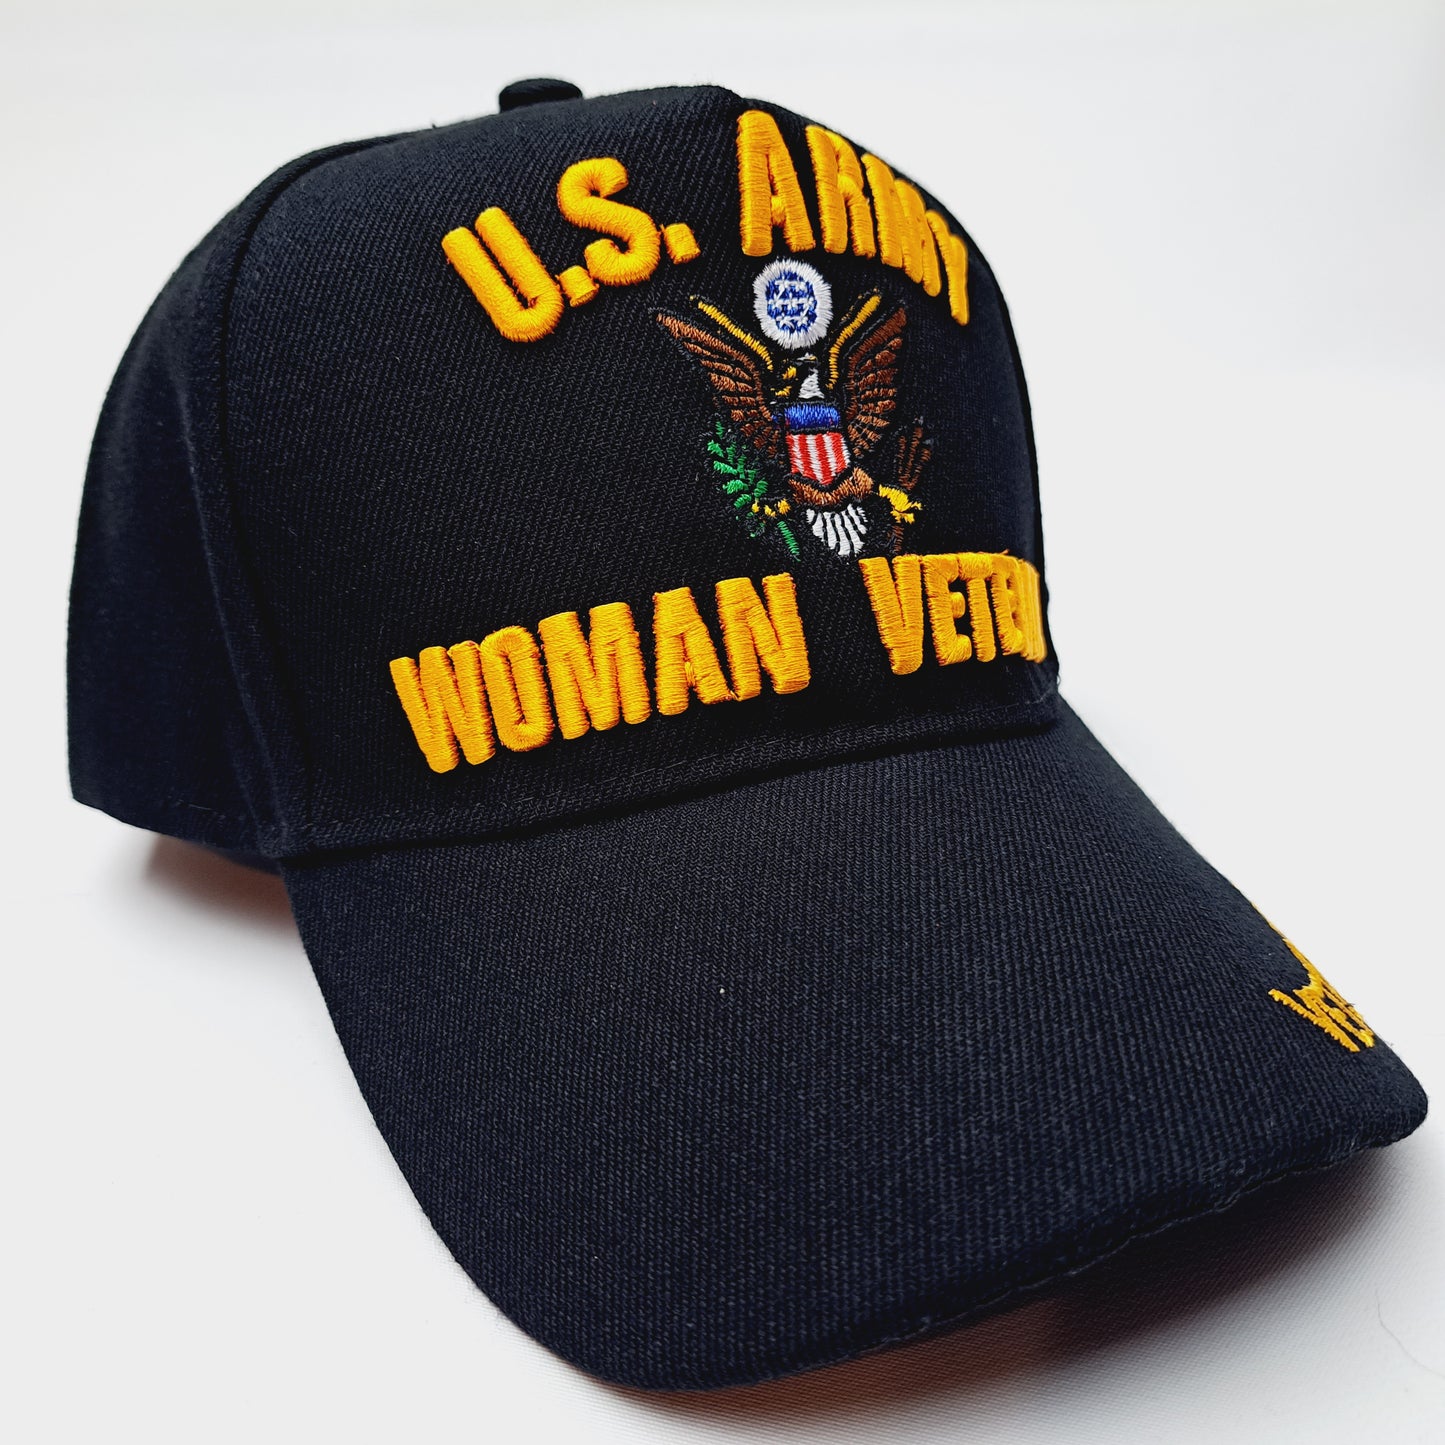 U.S. Army Woman Veteran Women's Baseball Cap Hat Navy Black Embroidered